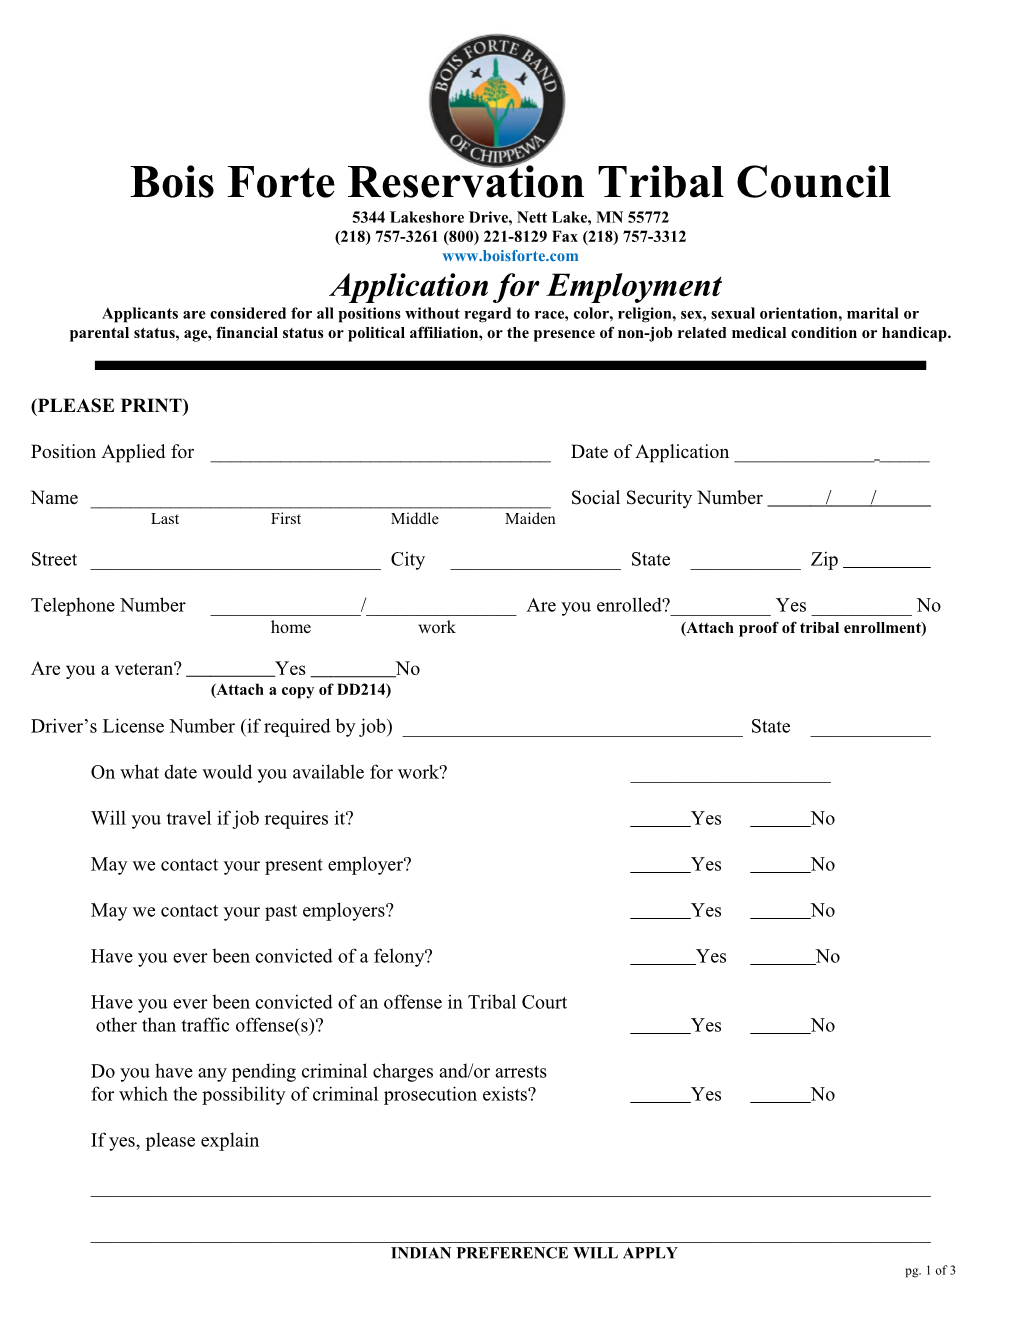 Bois Forte Reservation Tribal Council